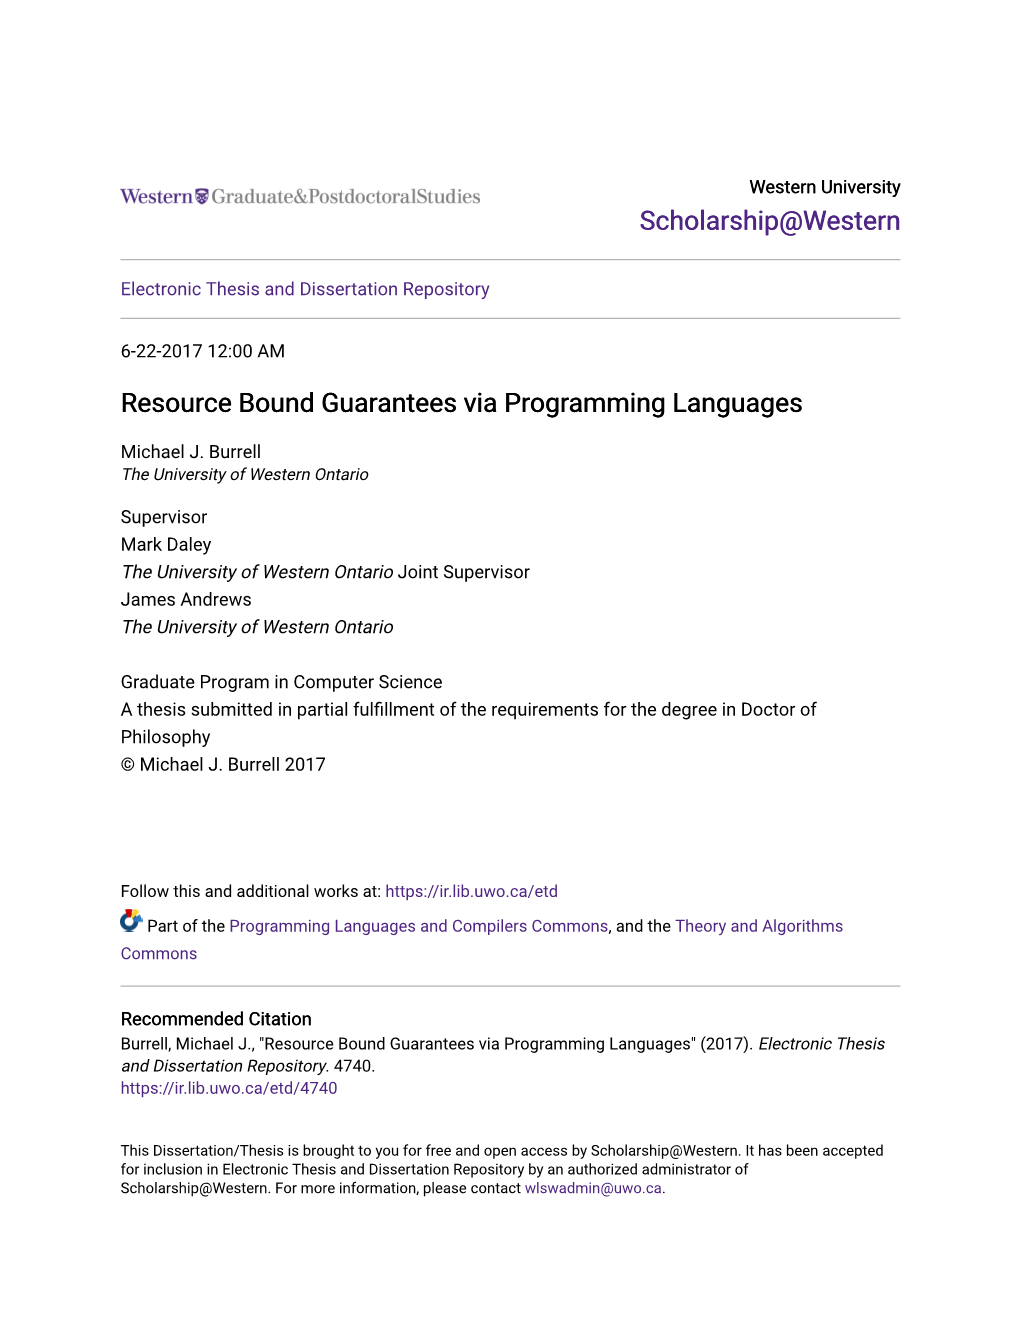 Resource Bound Guarantees Via Programming Languages